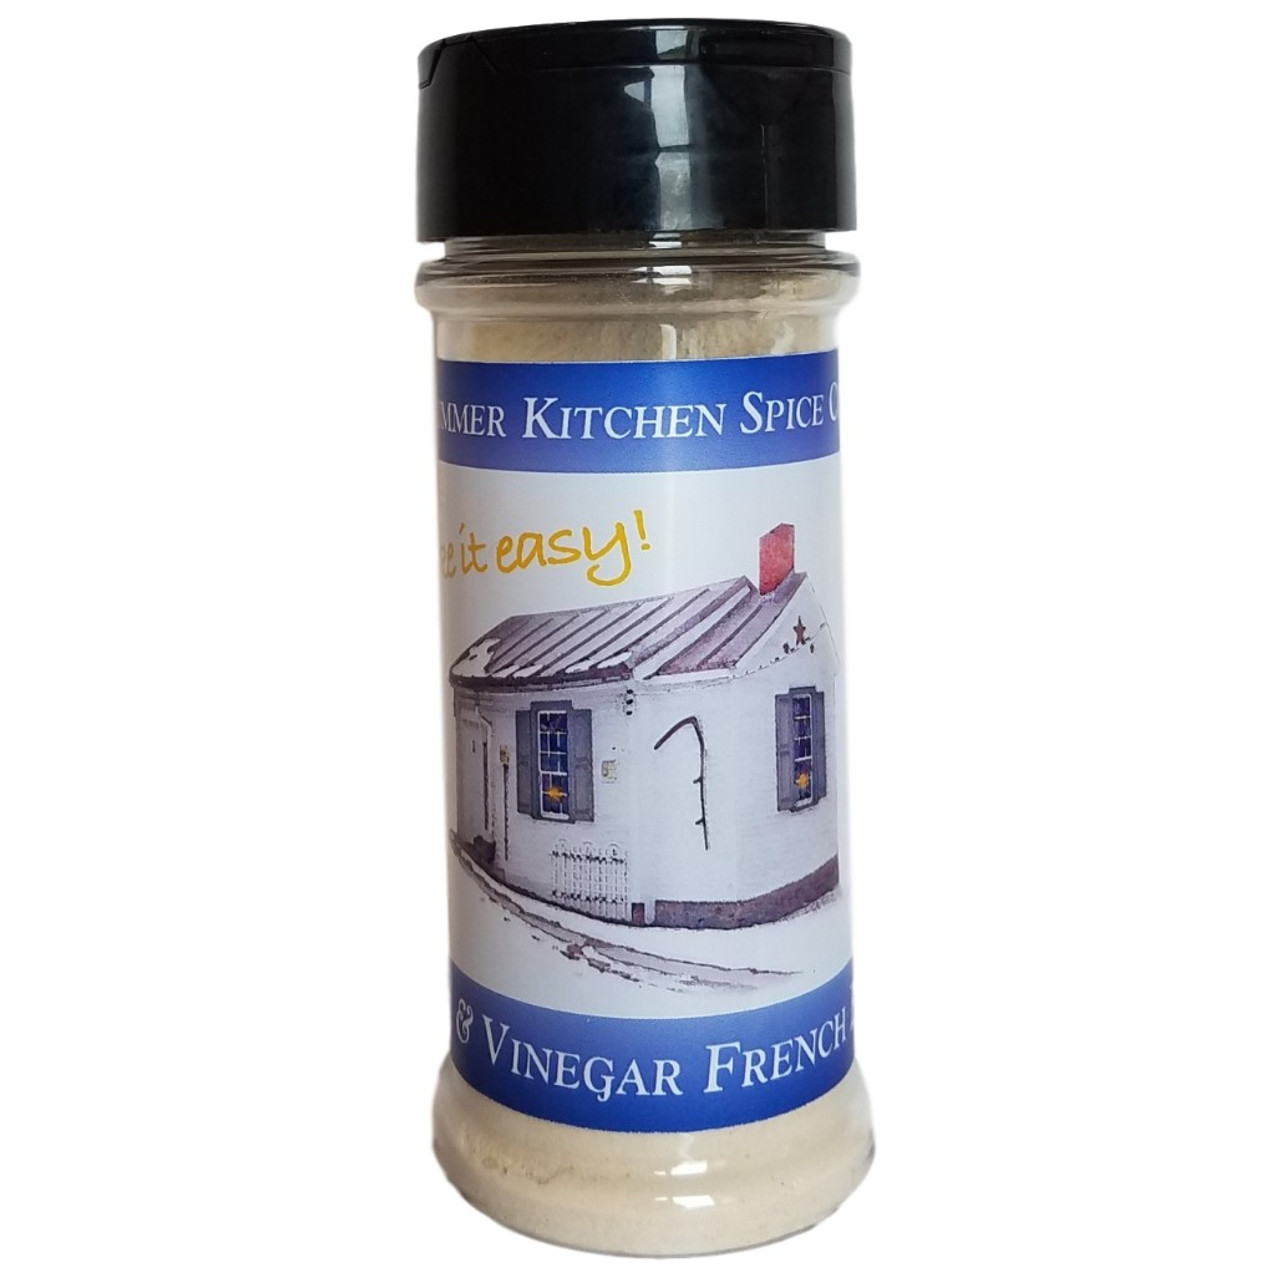 Summer Kitchen Spice Salt & Vinegar French Fry Seasoning